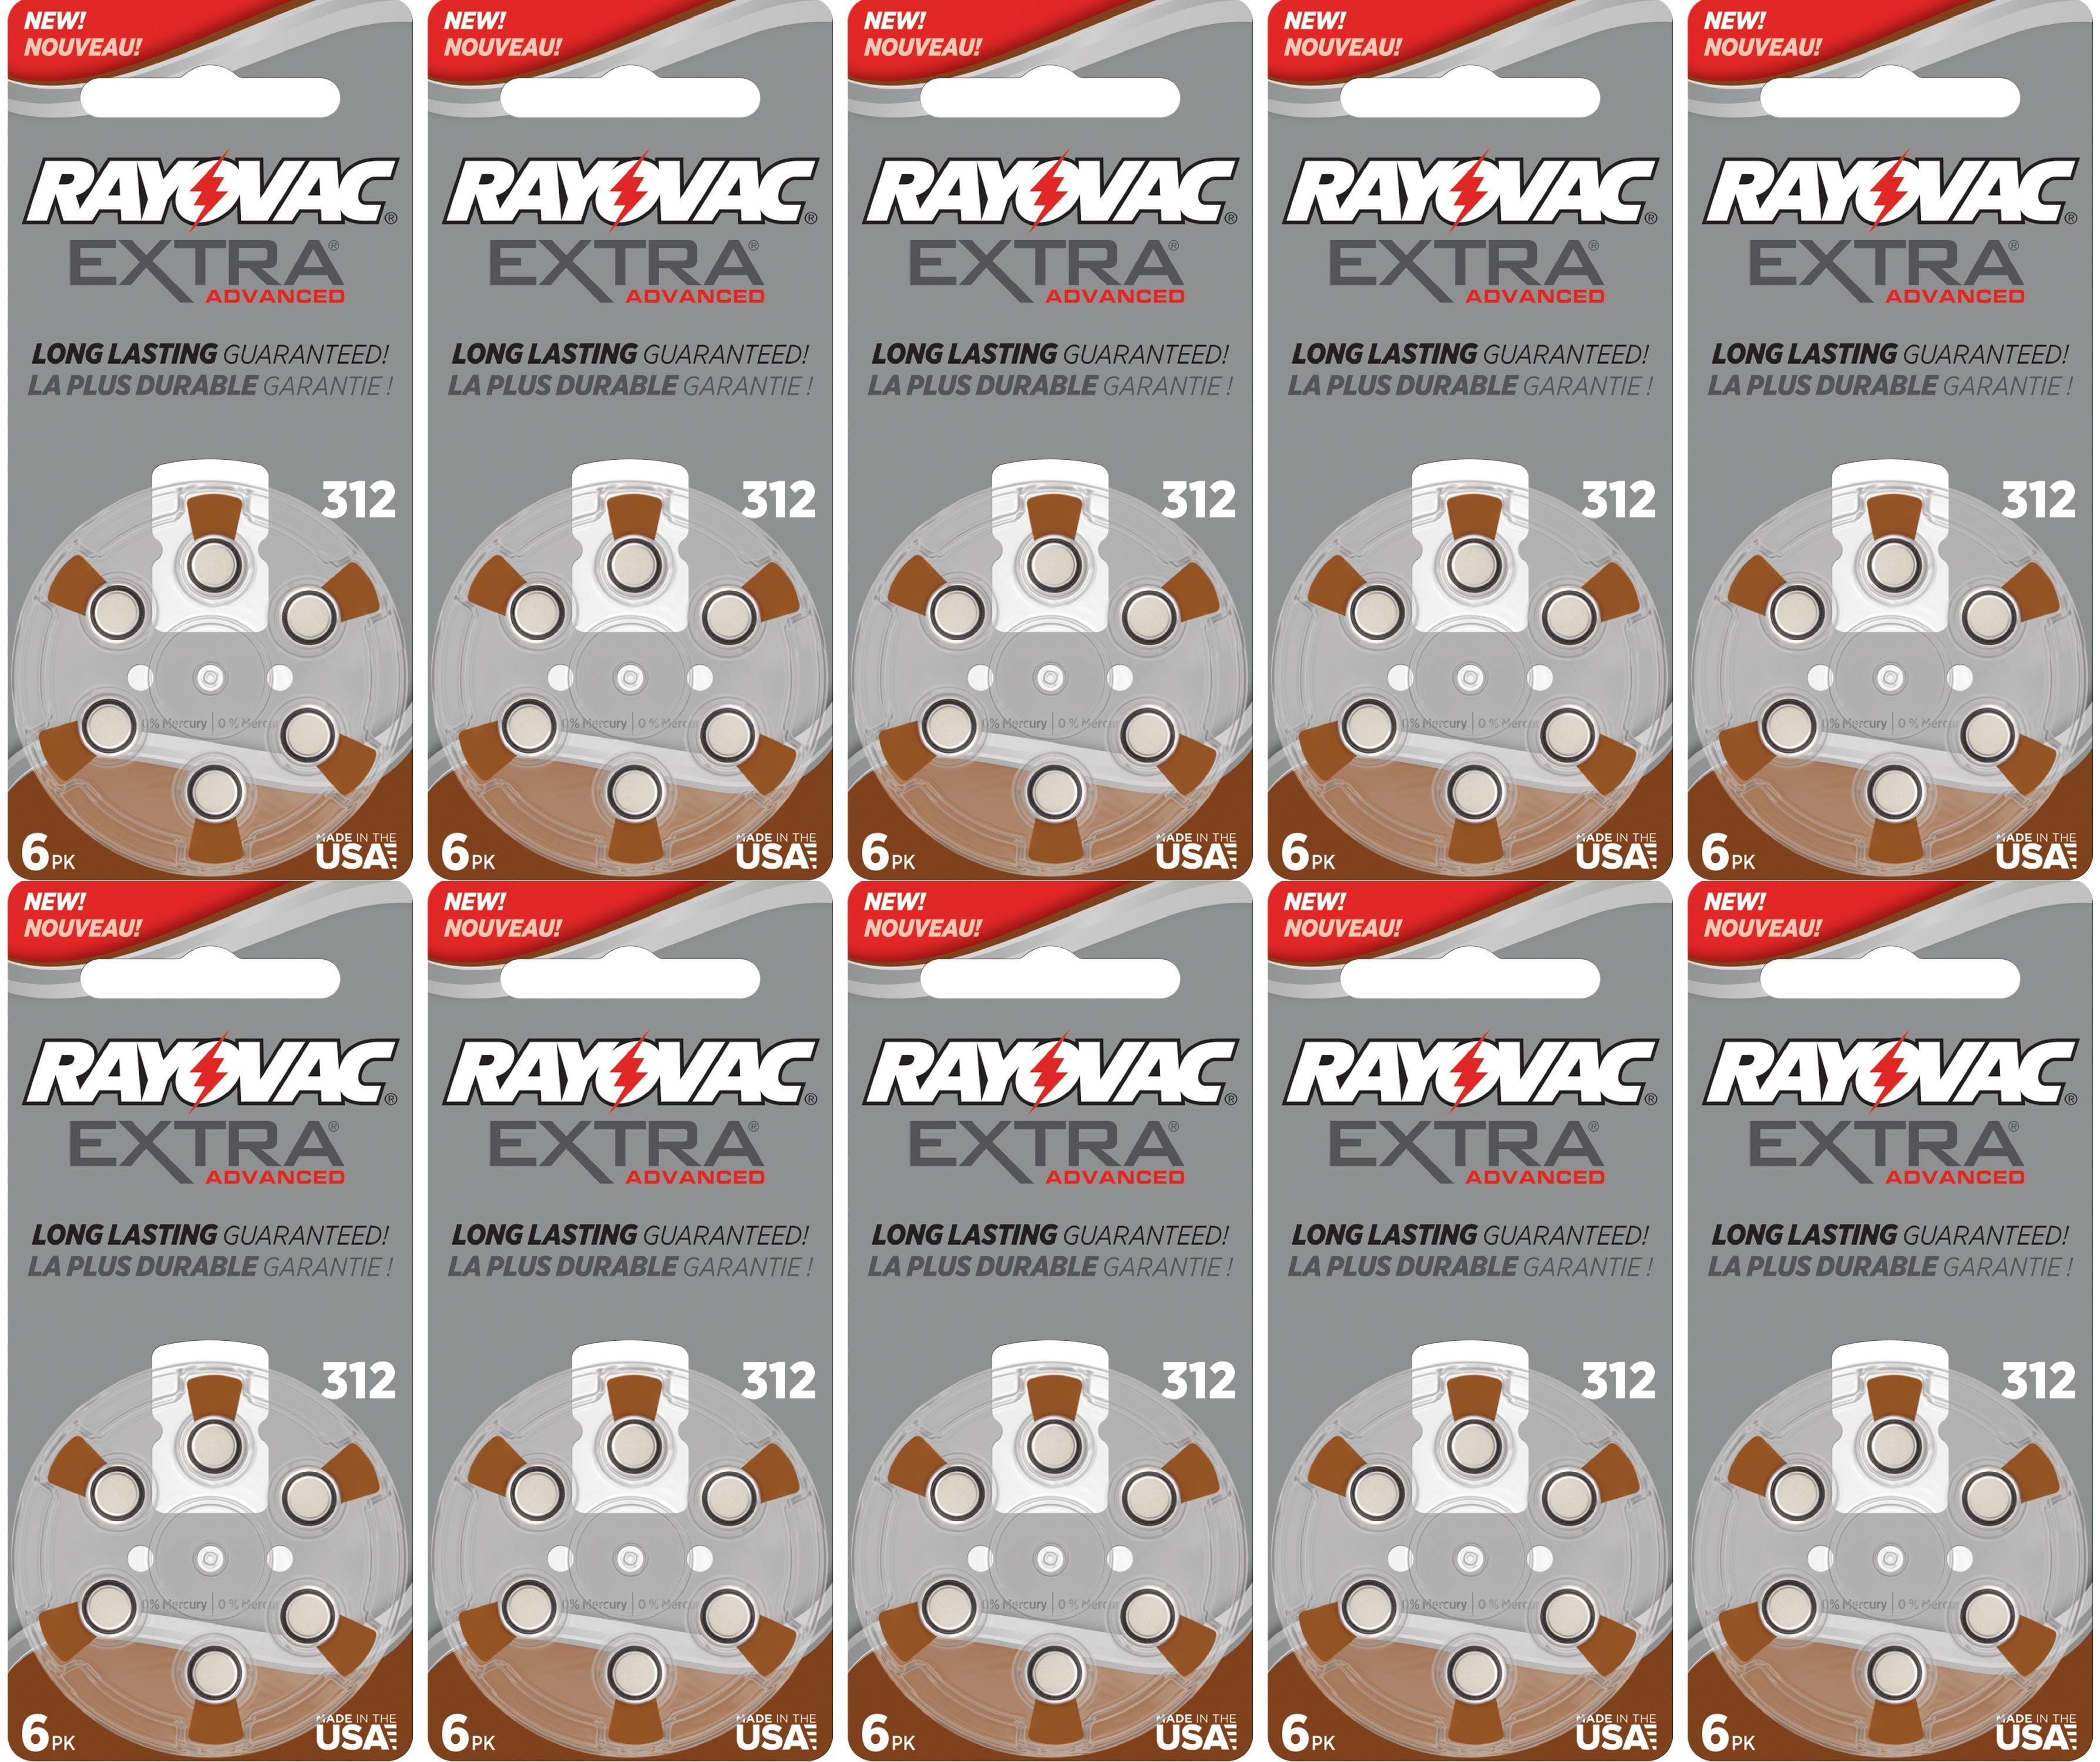 60 x Size 312 Rayovac Extra Advanced Hearing Aid Batteries 